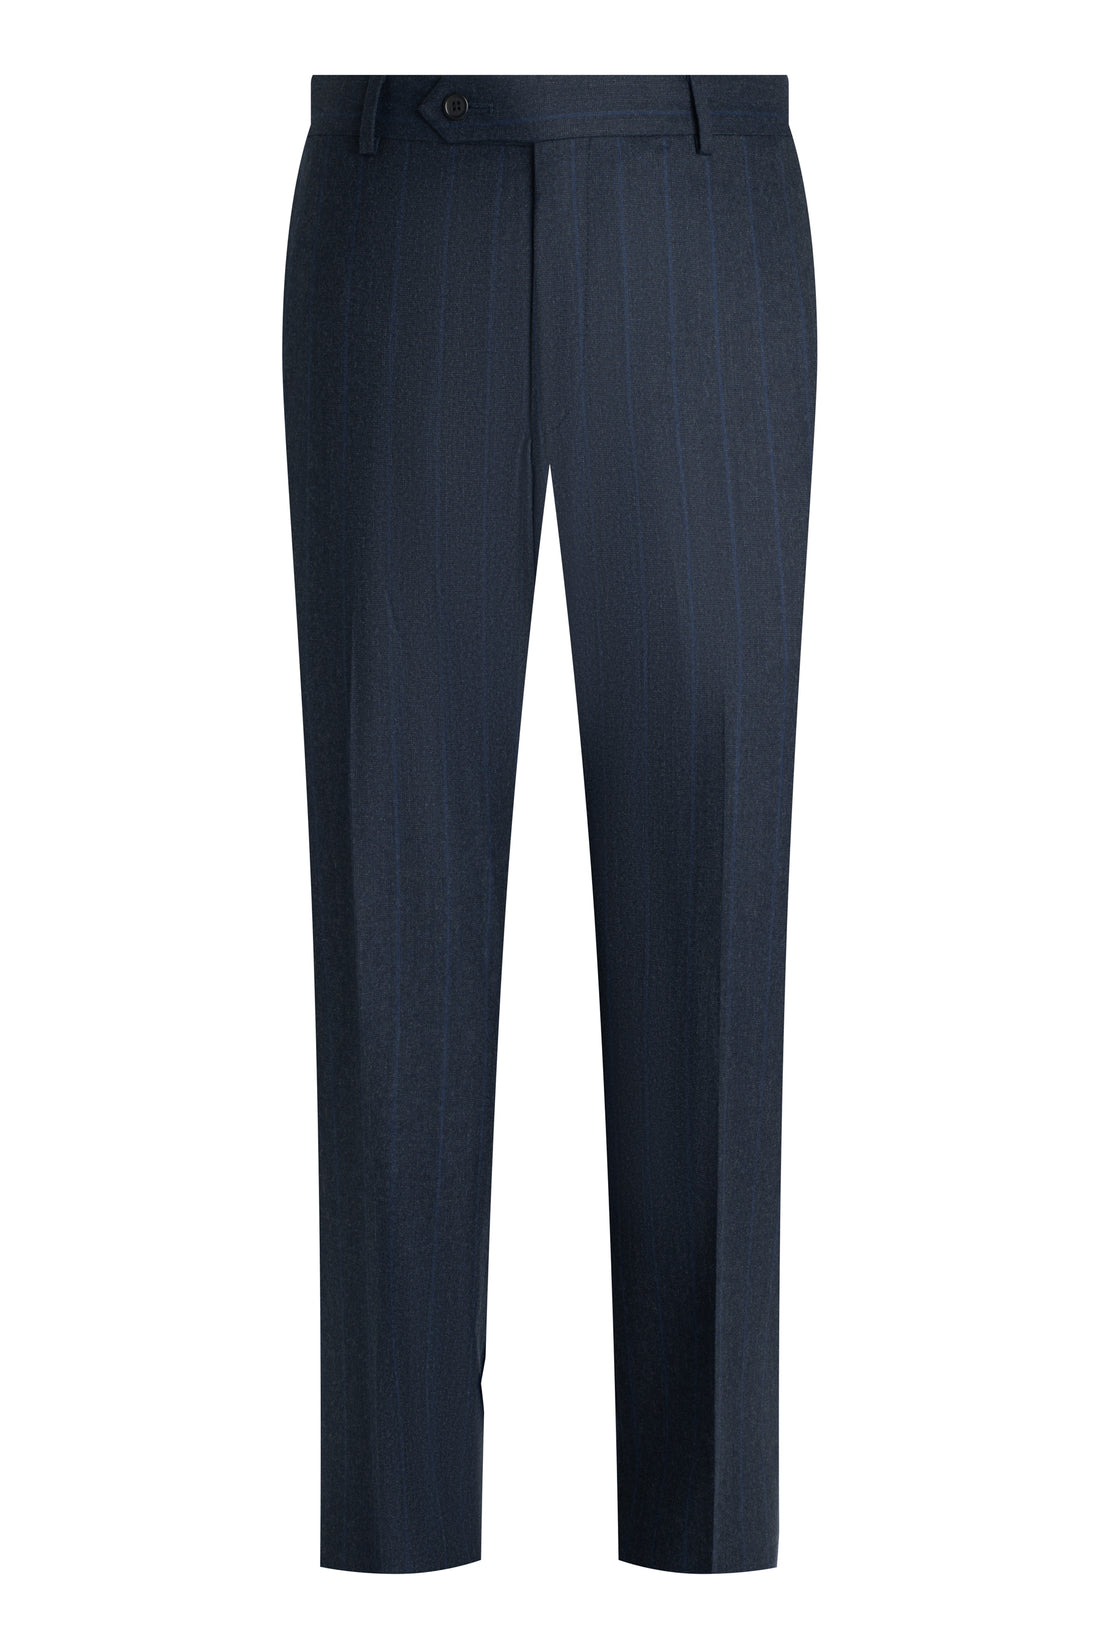 Navy Stripe Soft Loop Suit front pant